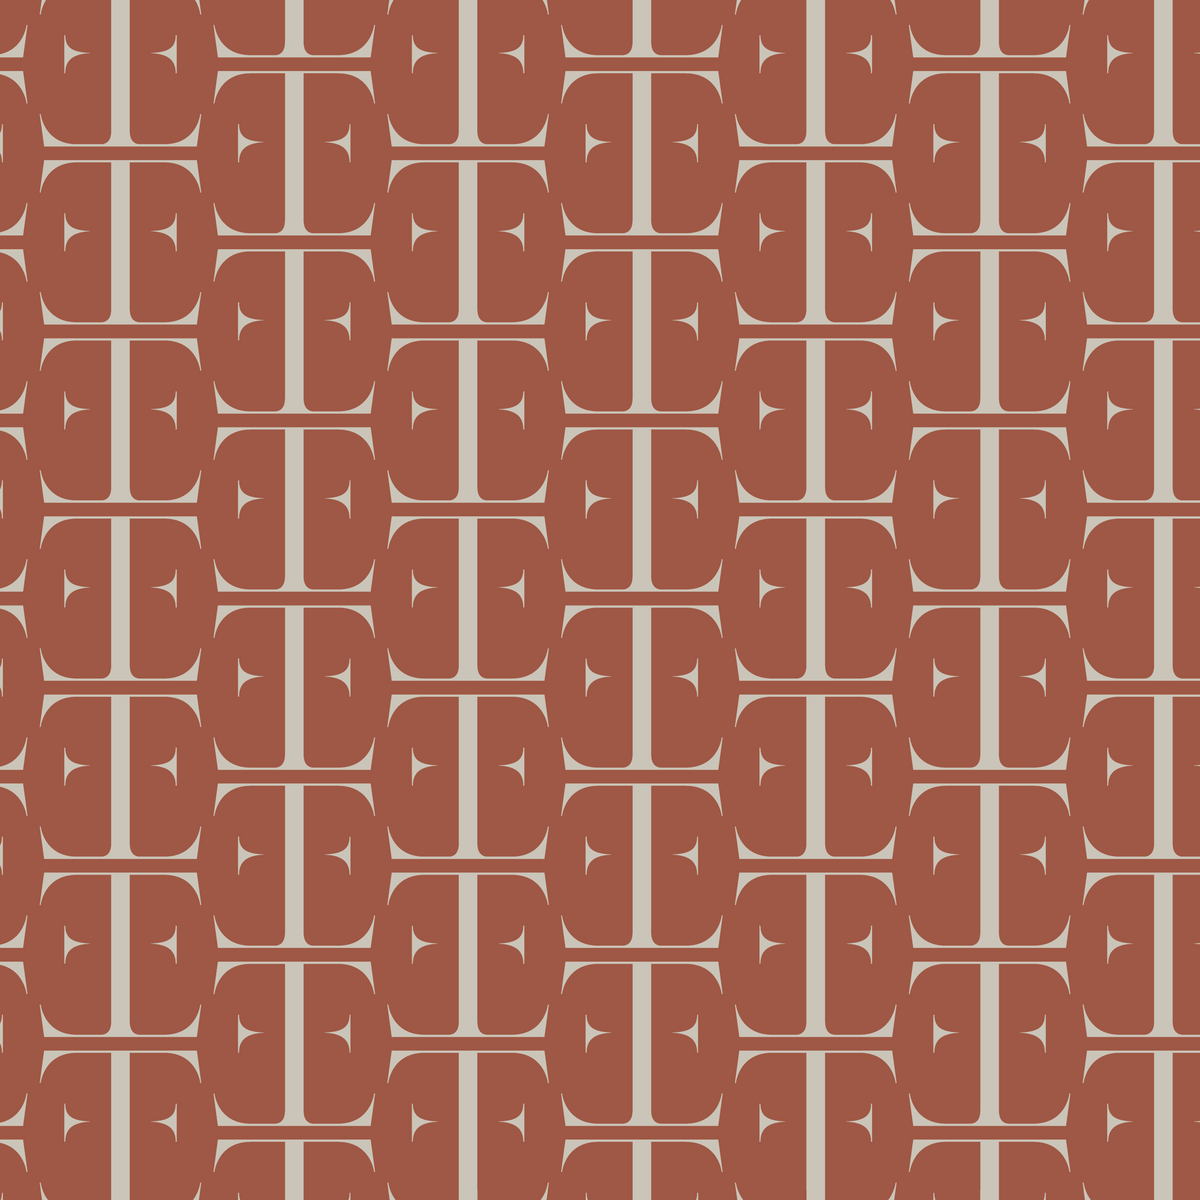 TEE Patterns_Pattern 1